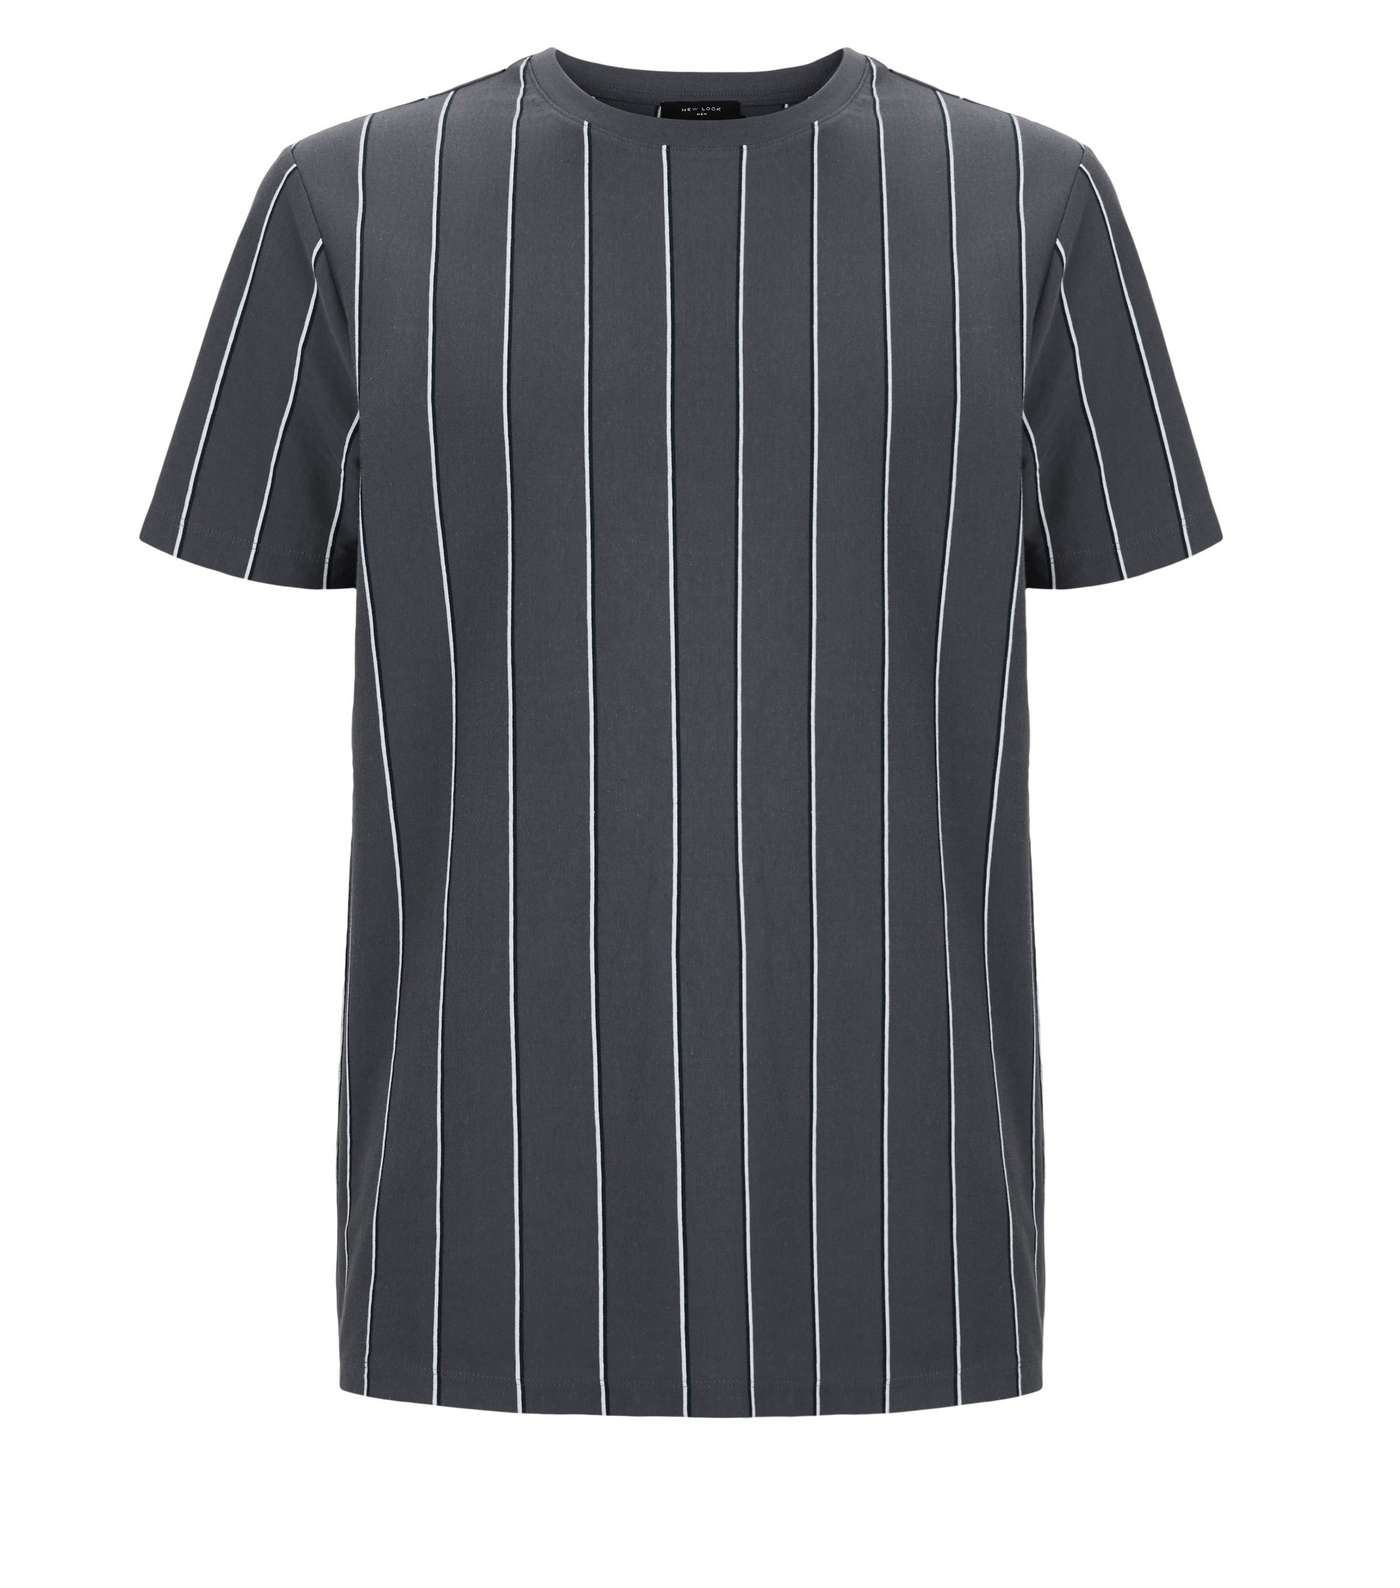 Grey Vertical Stripe T-Shirt Image 4